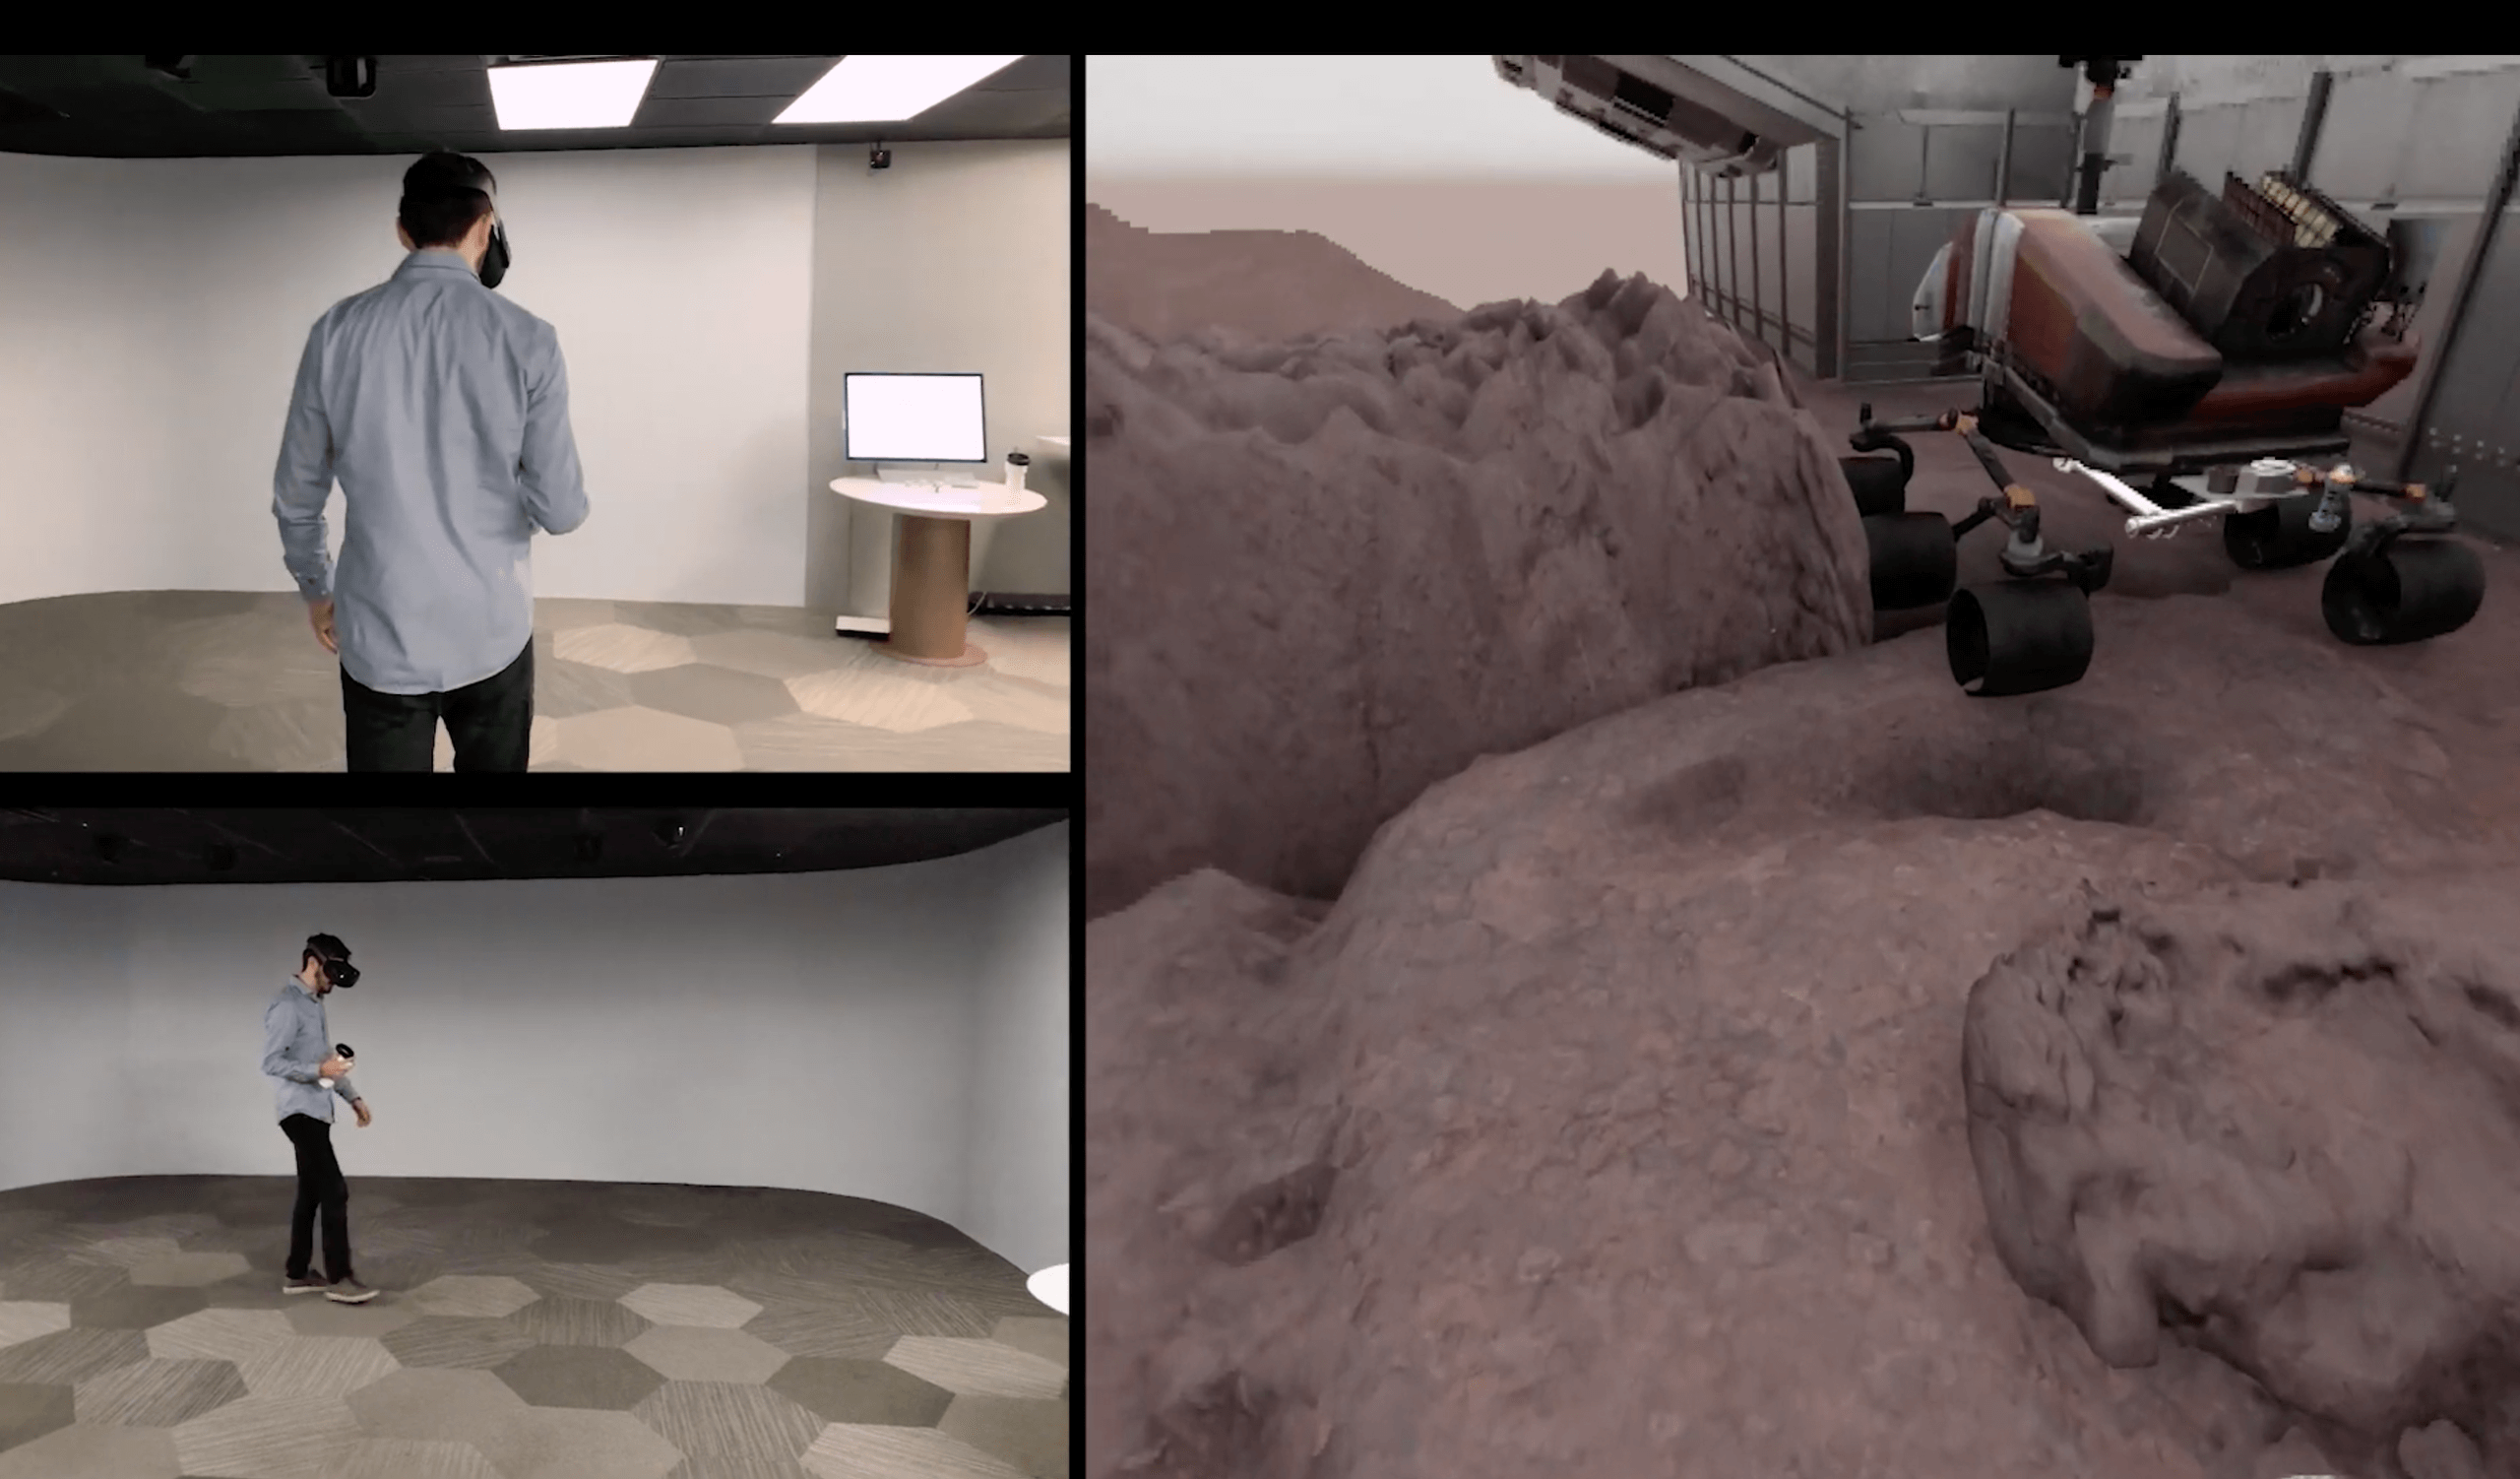 Mars Rover Experience